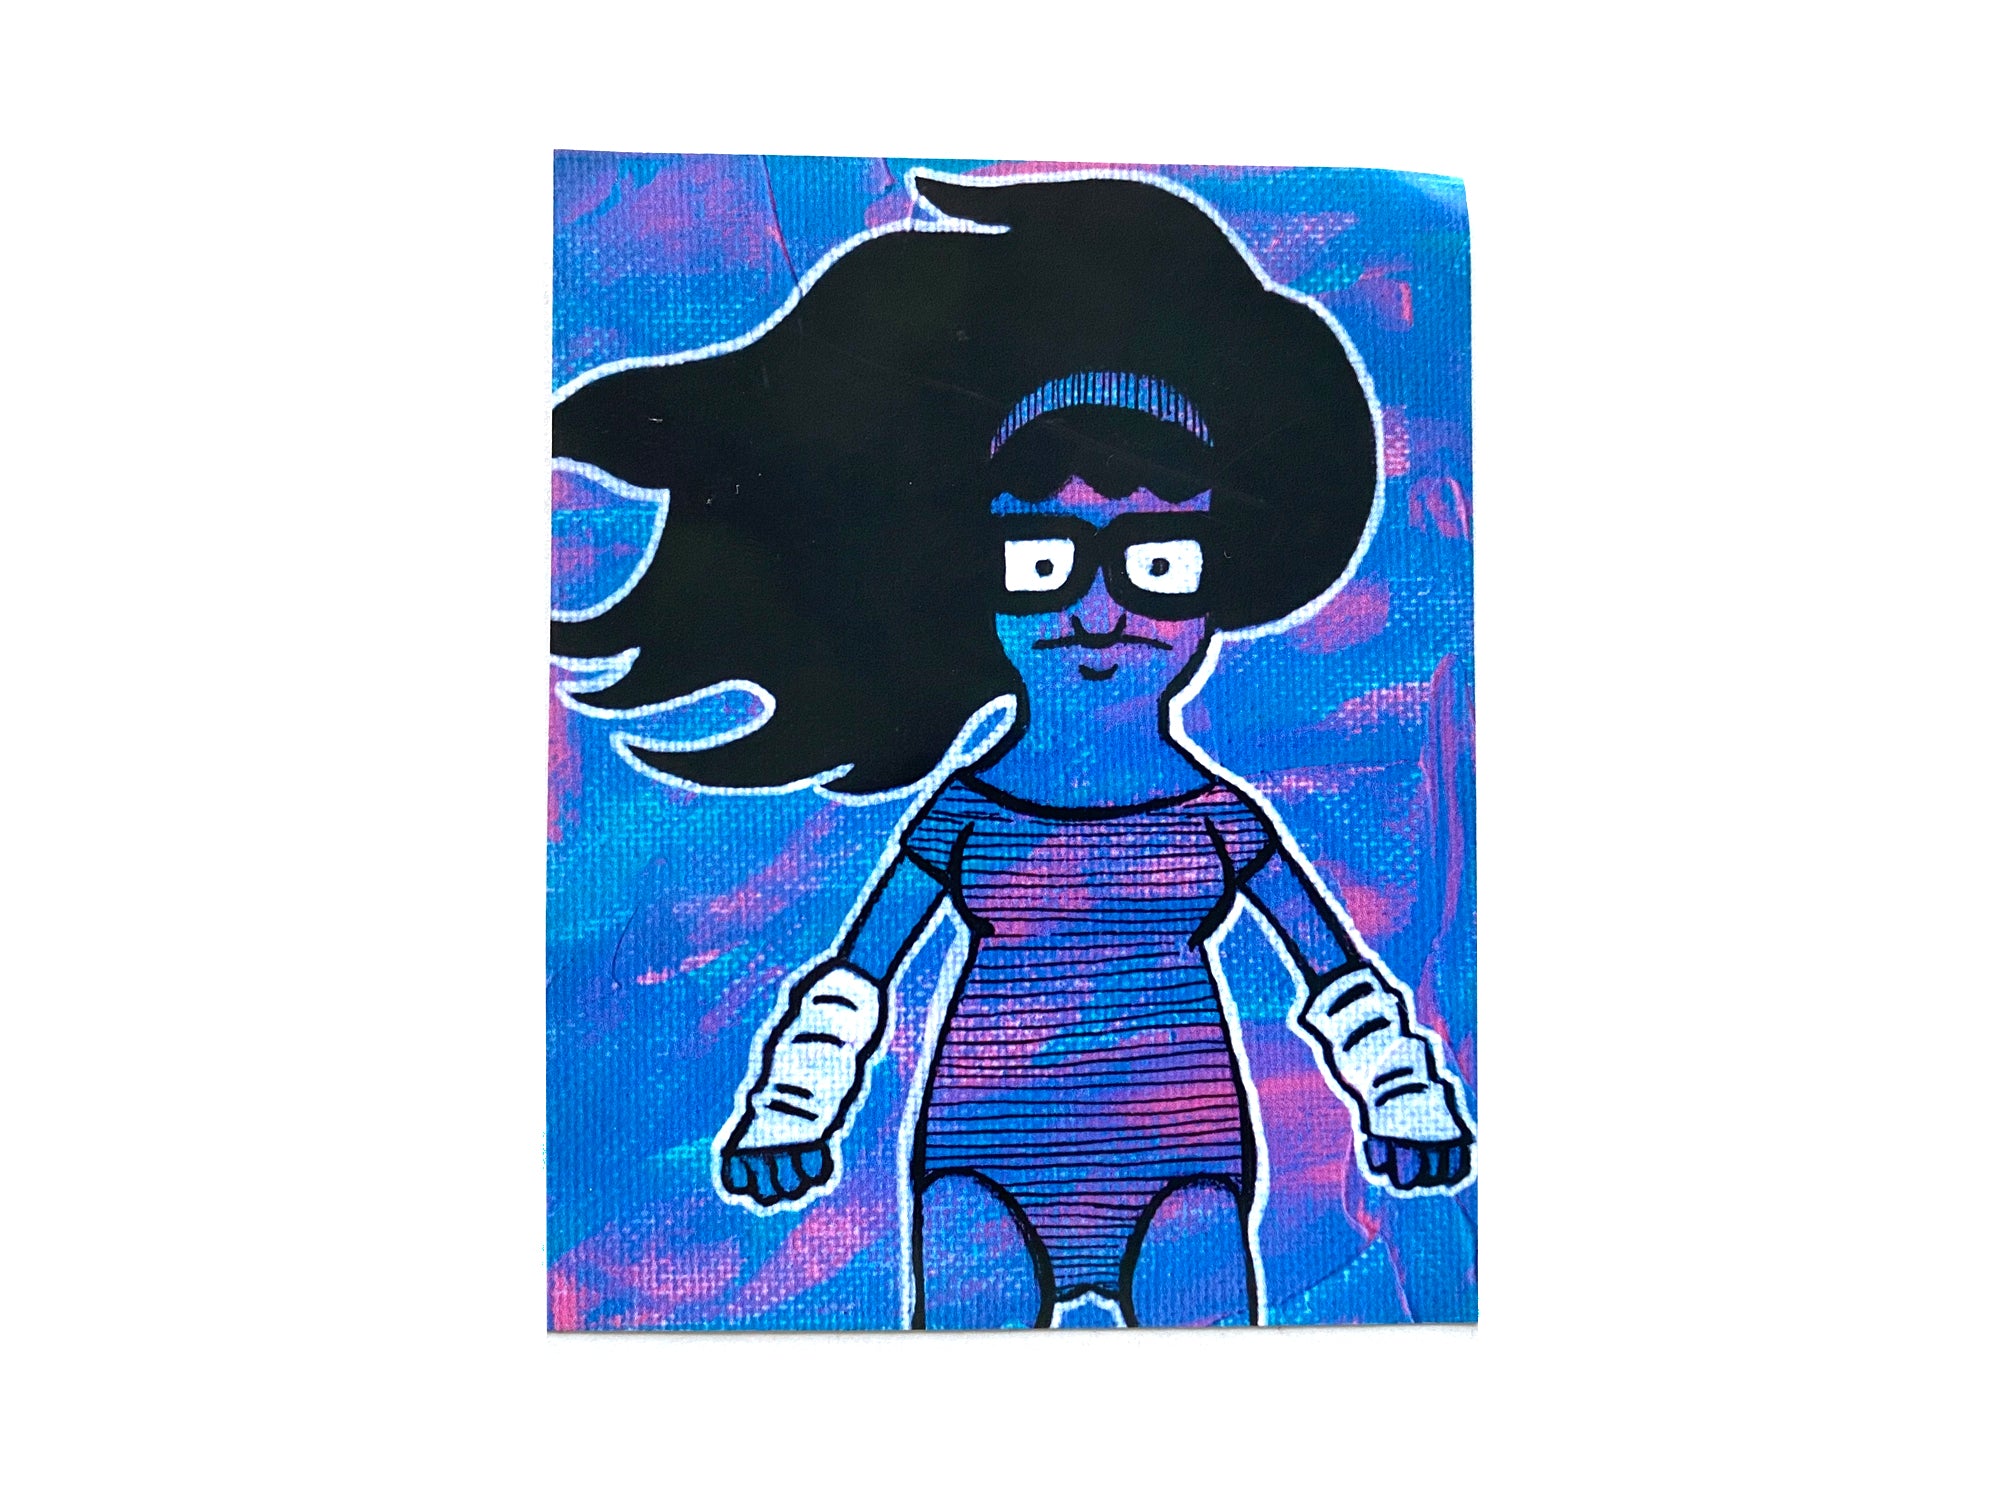 Tina Sticker